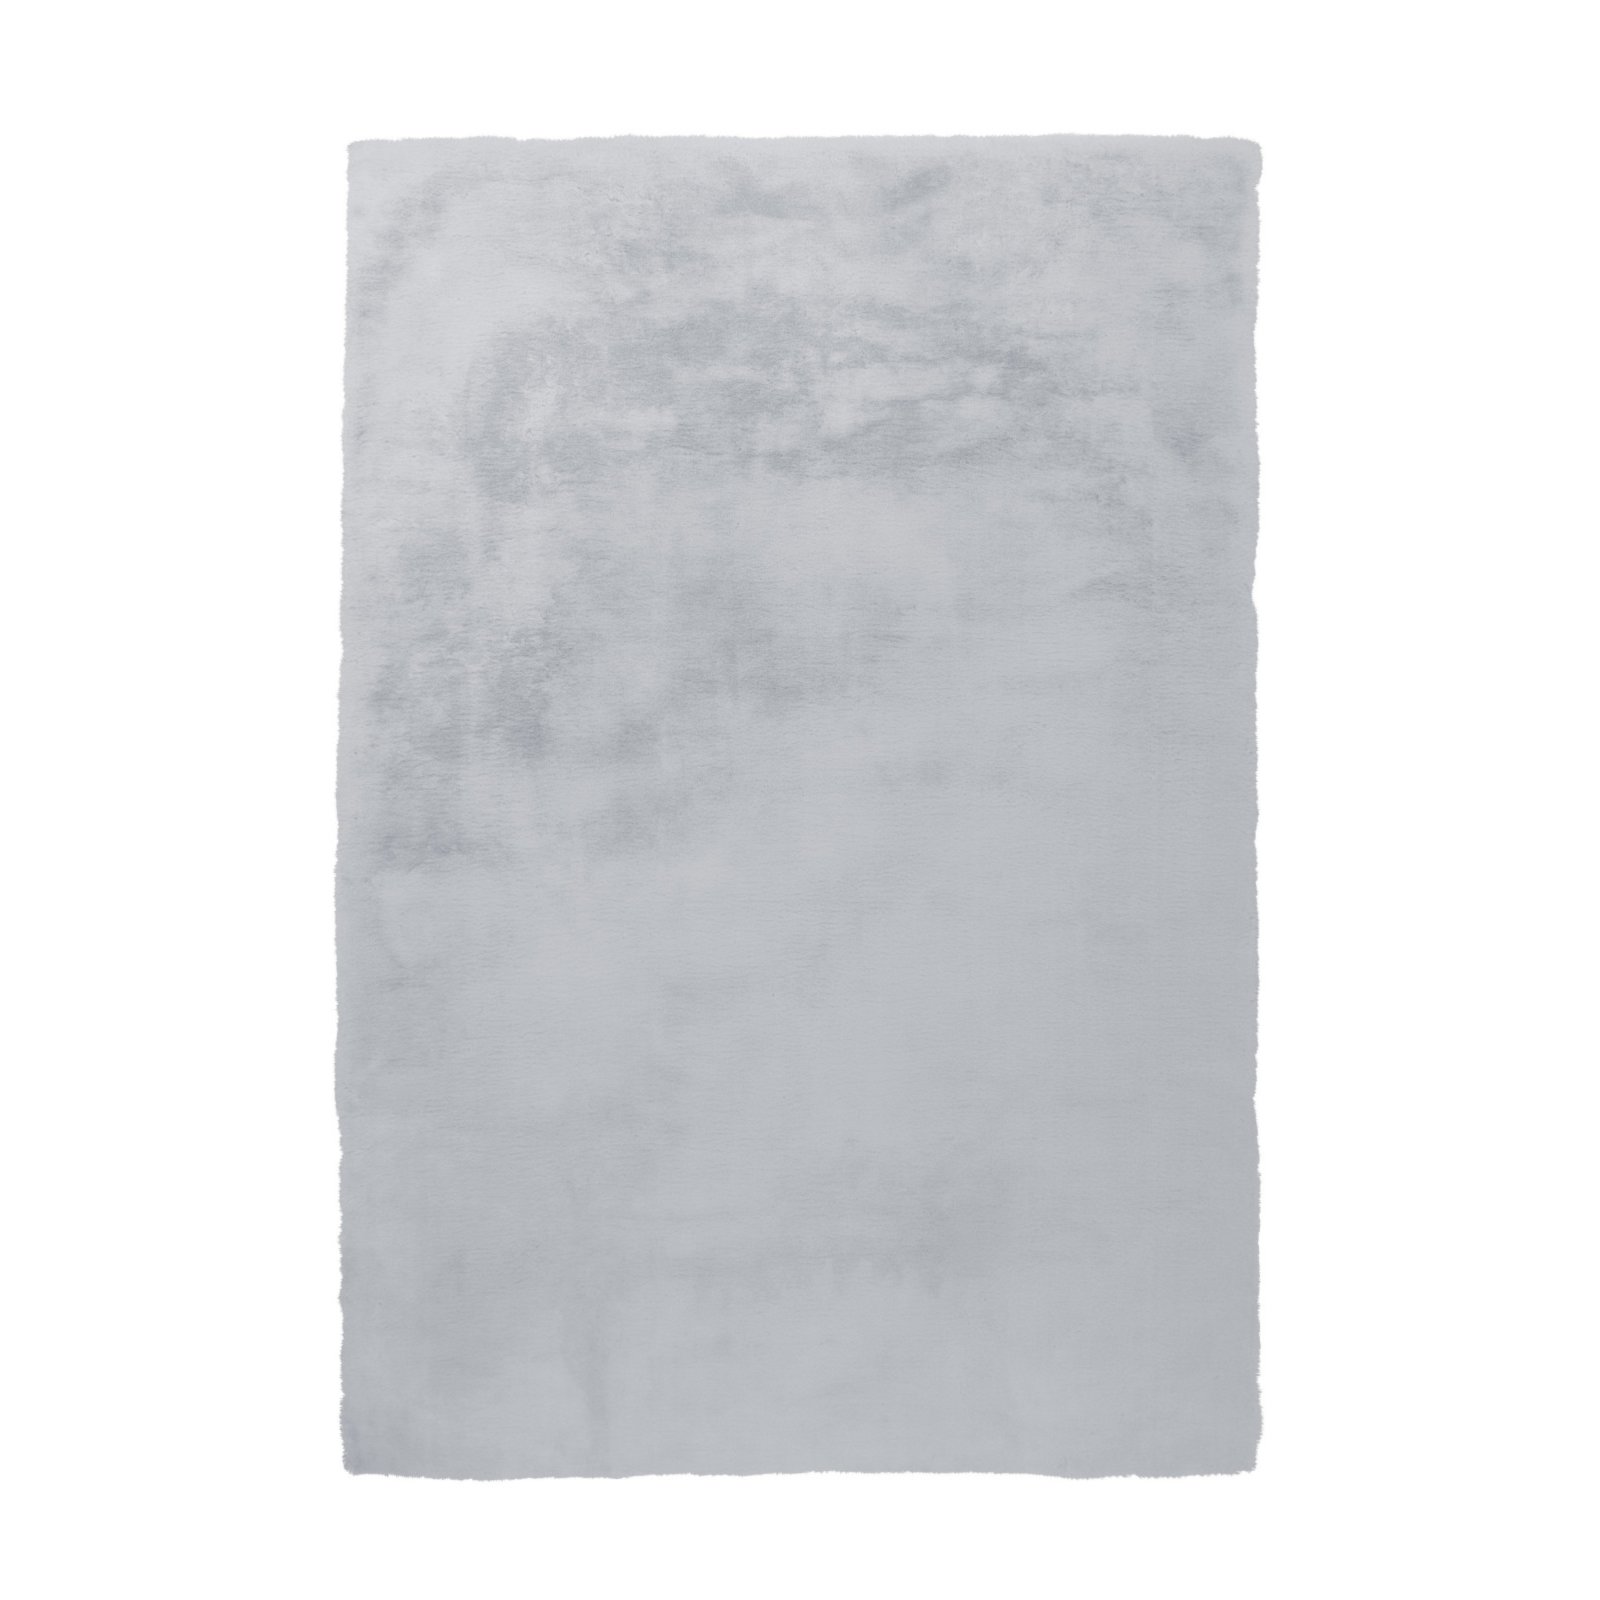 Kunstfell-Teppich - Kaninchenfell-Haptik - grau-blau - 160x230 cm | Online  bei ROLLER kaufen